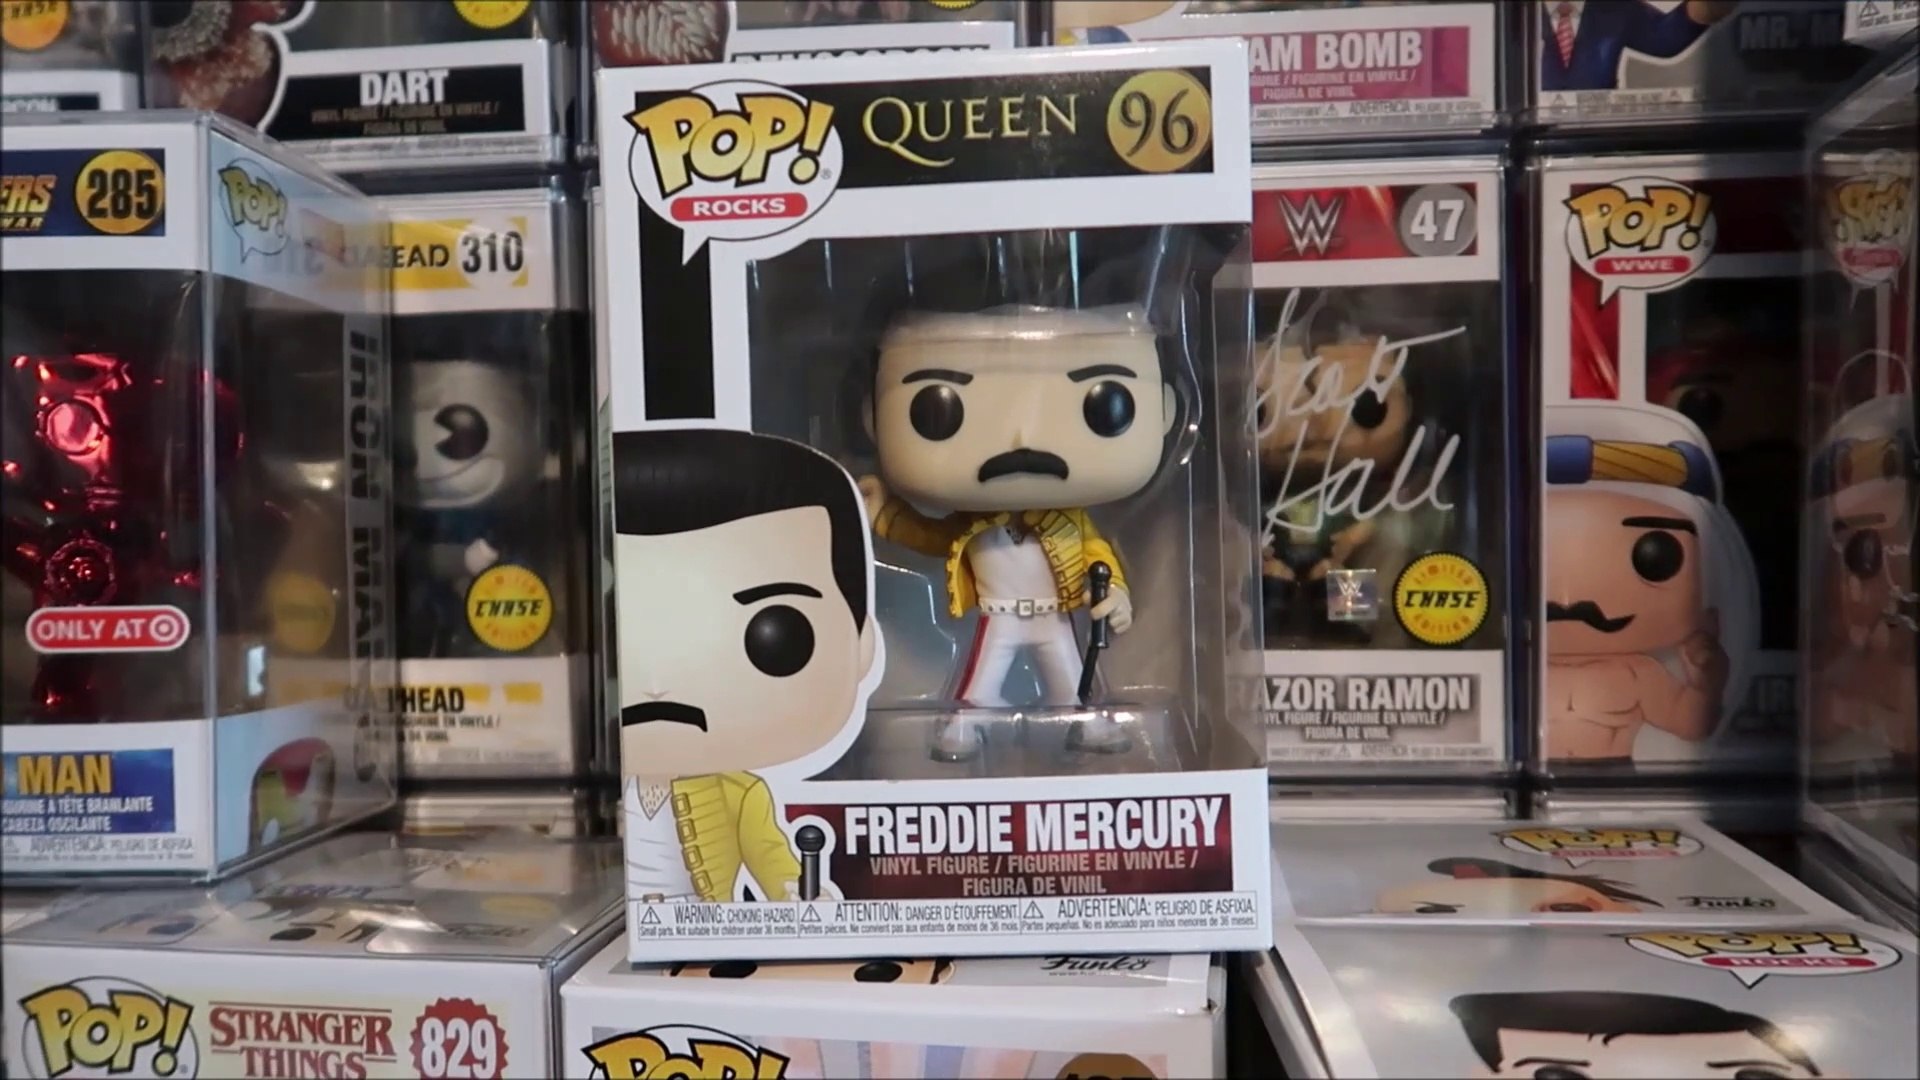 Queen Freddie Mercury Wembley Stadium 1986 Pop! Vinyl Figure 96 - video  Dailymotion